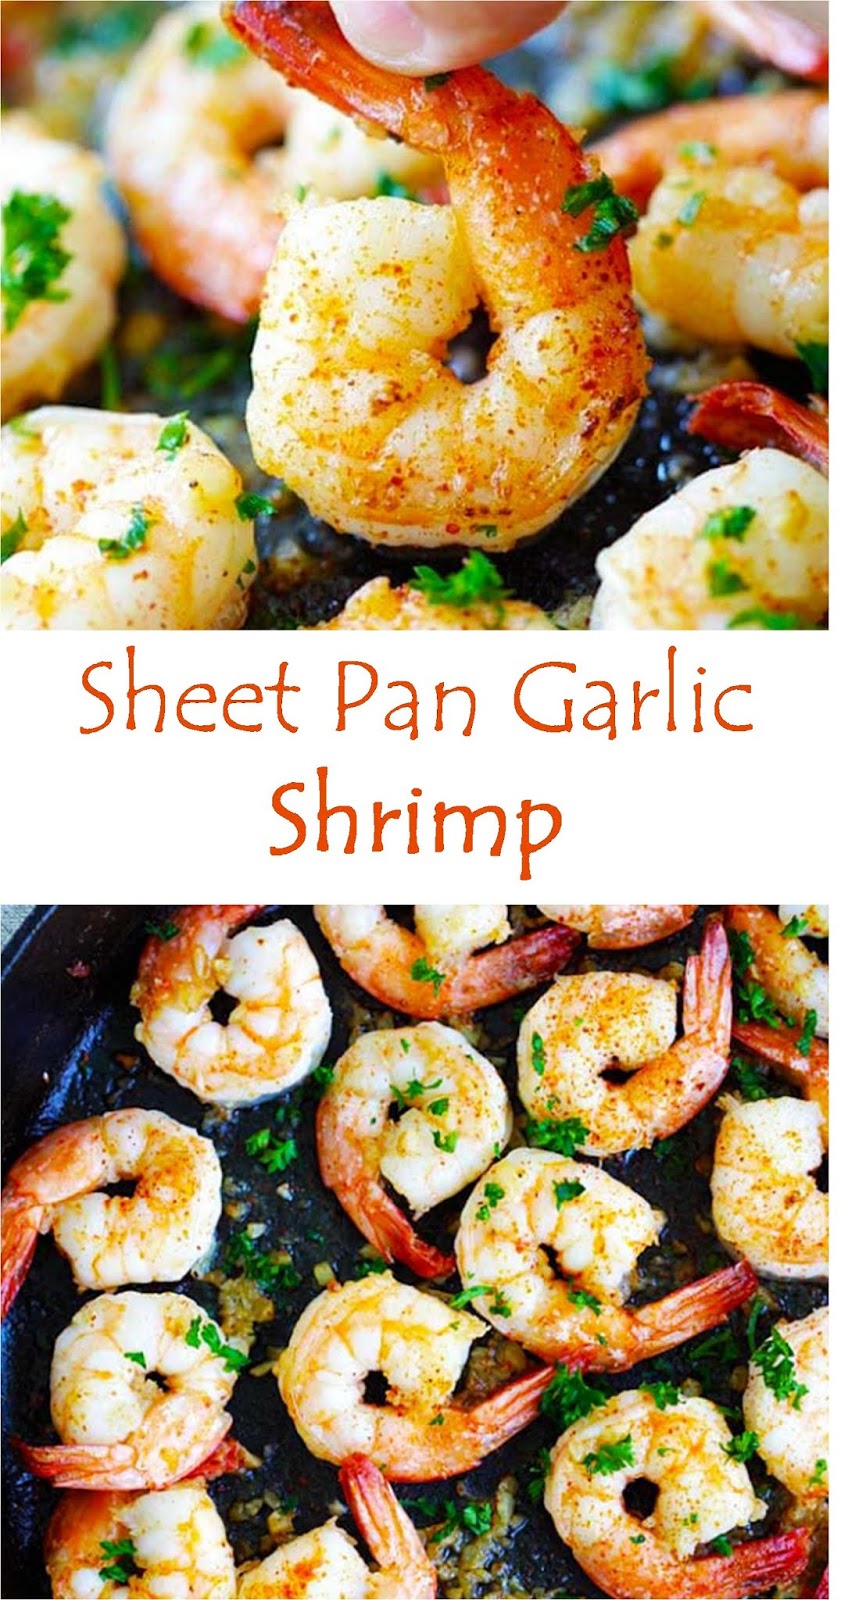 1378 Reviews: My BEST #Recipes >> Sheet Pan Garlic #Shrimp - ~~~.